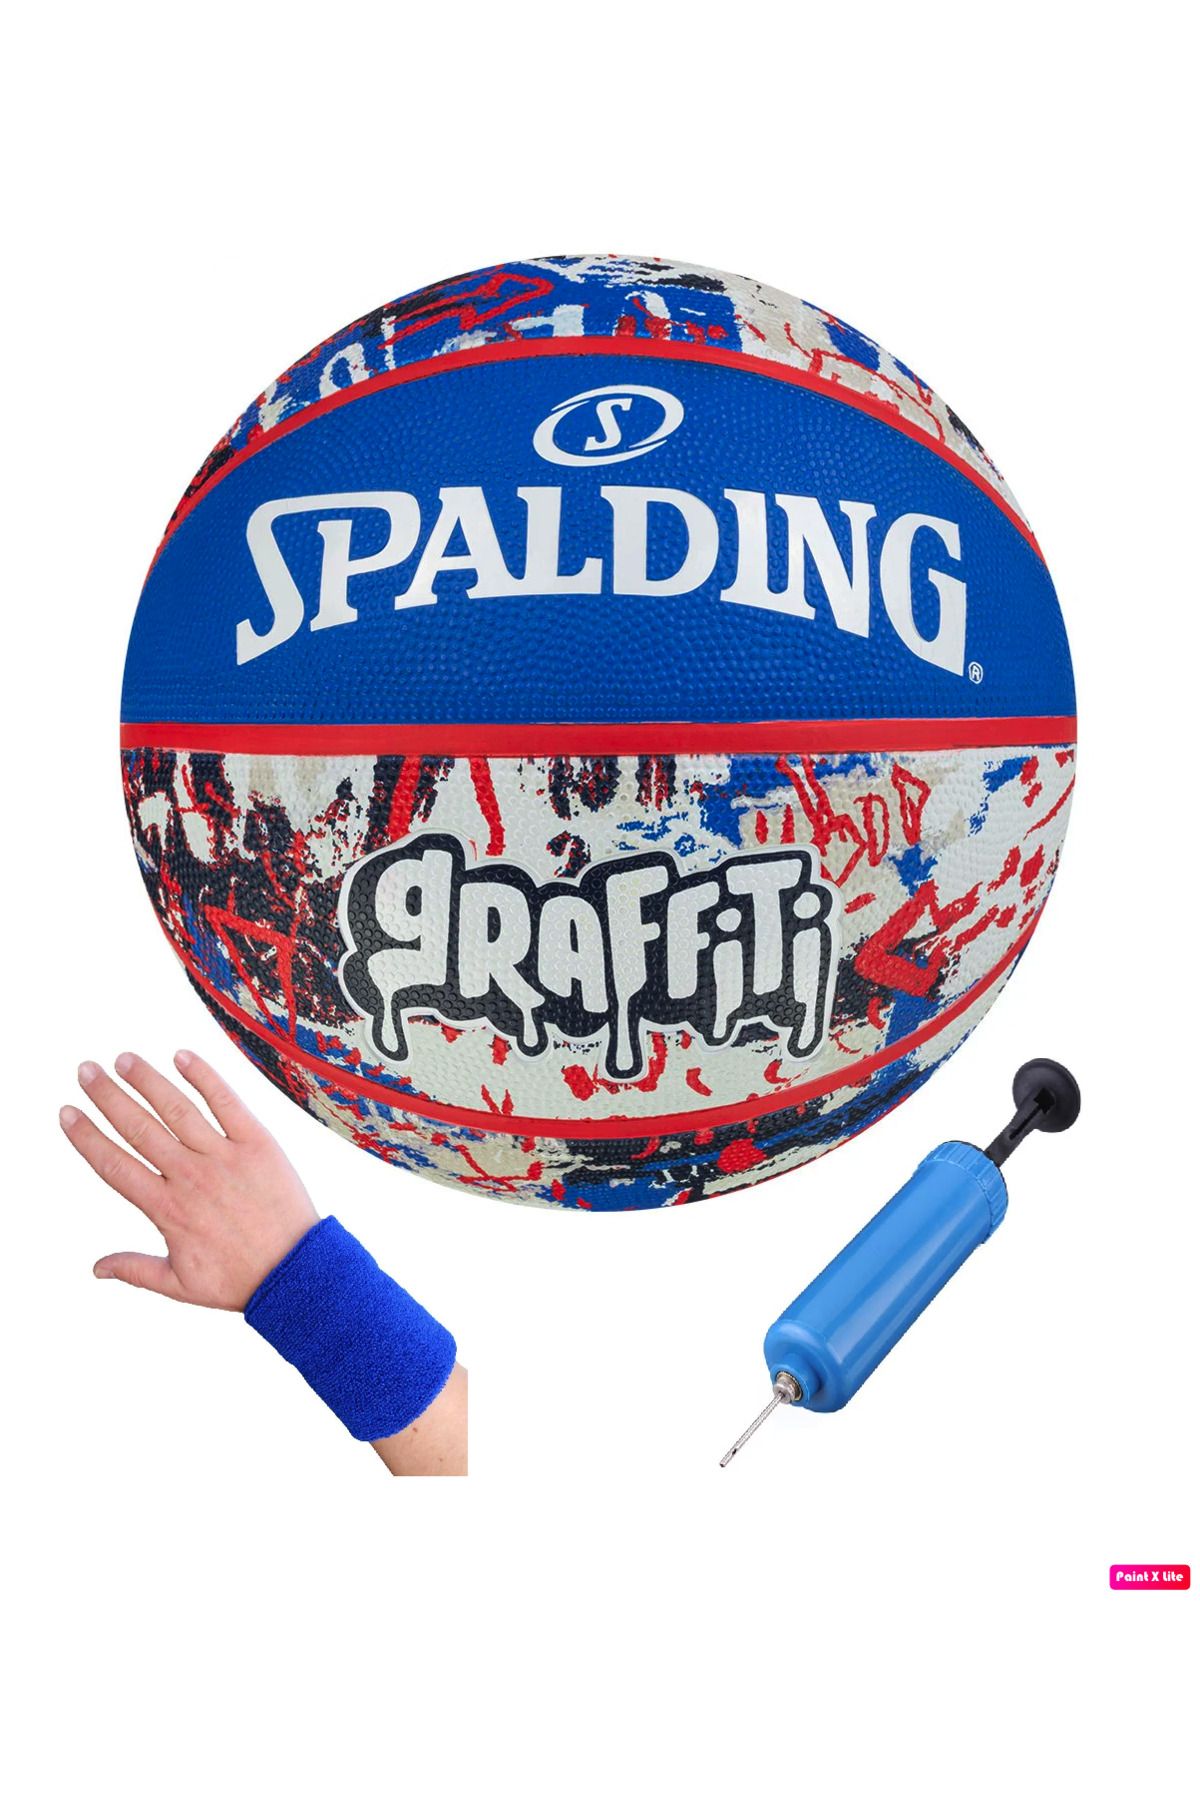 Spalding Graffiti 8 Panel Basketbol Topu Performance Outdoor Kauçuk Yüzey + Pompa + Havlu Bileklik